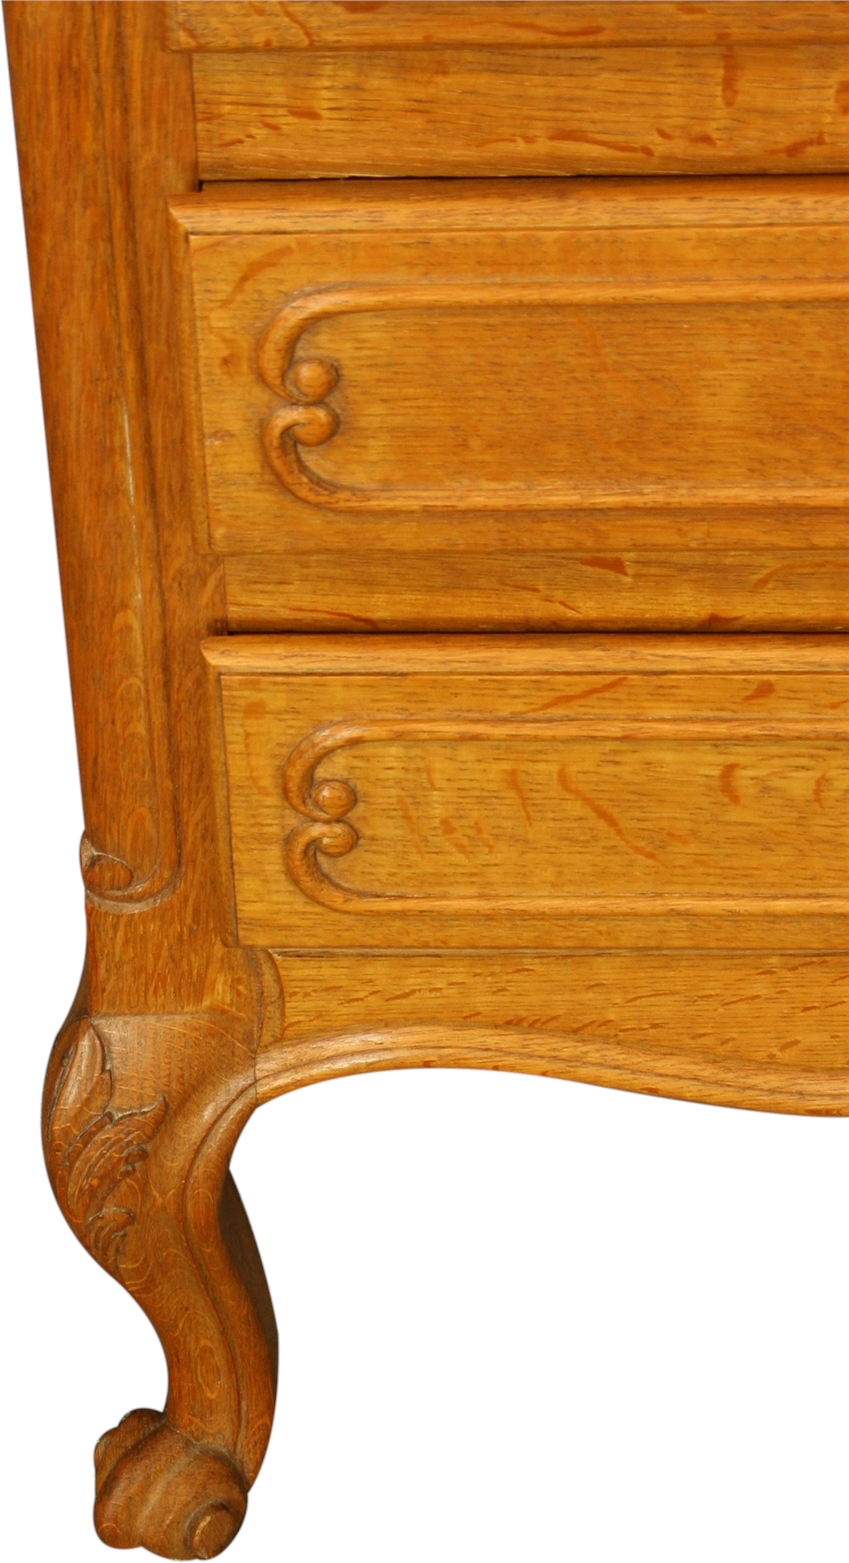 Vintage French Secretary Desk, Quartersawn Golden Oak, Carved, Louis XV Style-Image 6